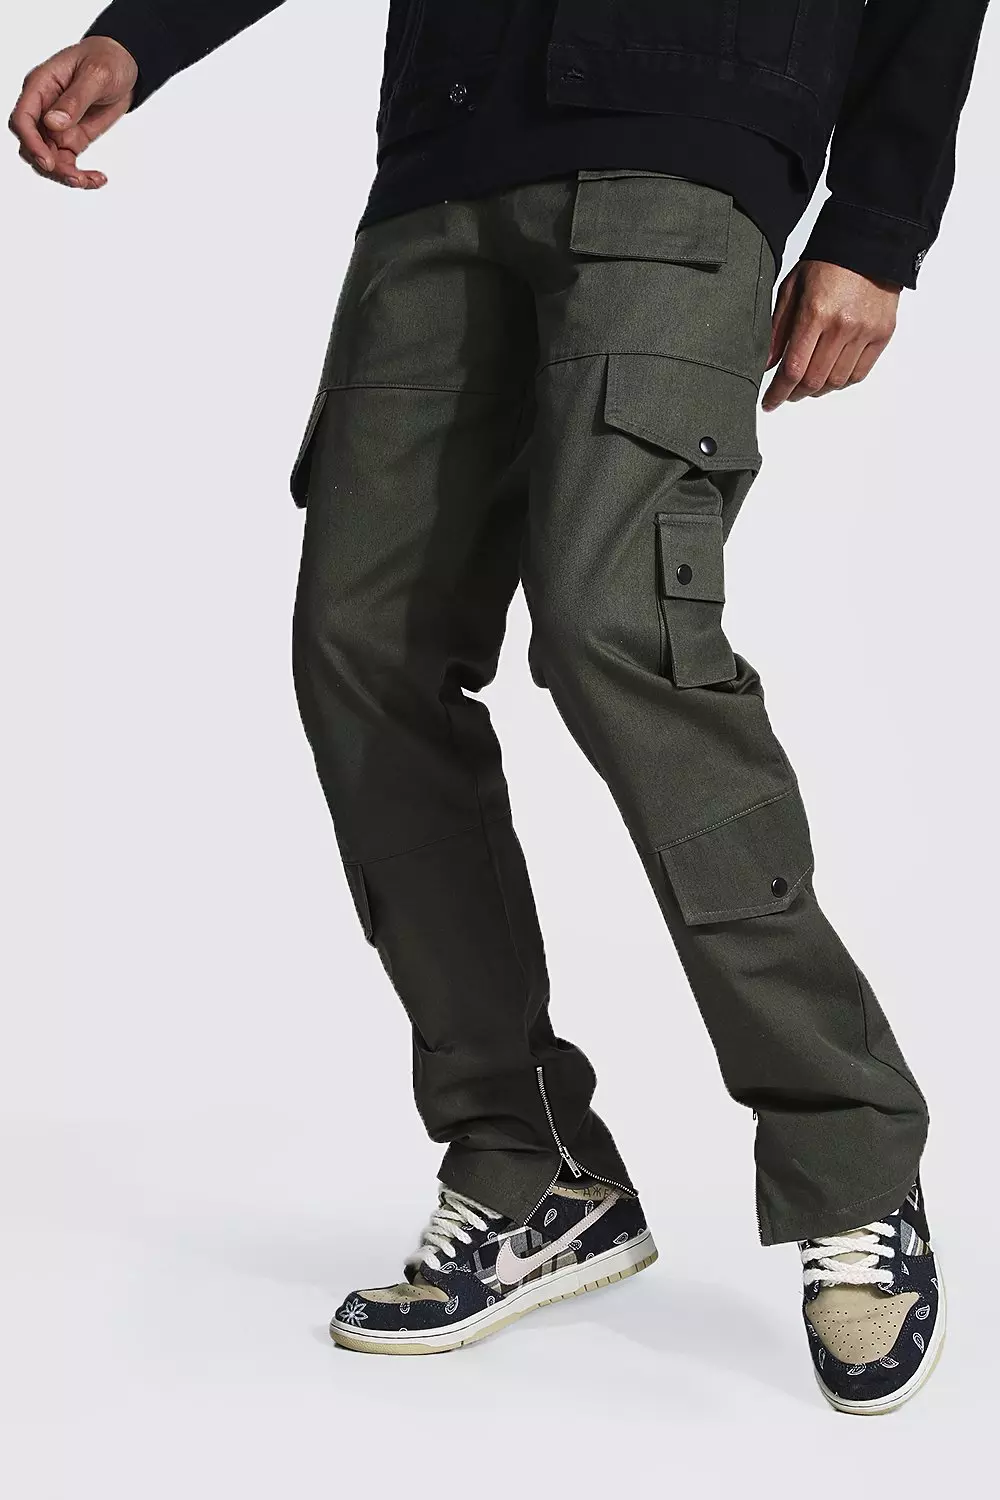 H&M canvas cargo trouser (size 36), Women's Fashion, Bottoms